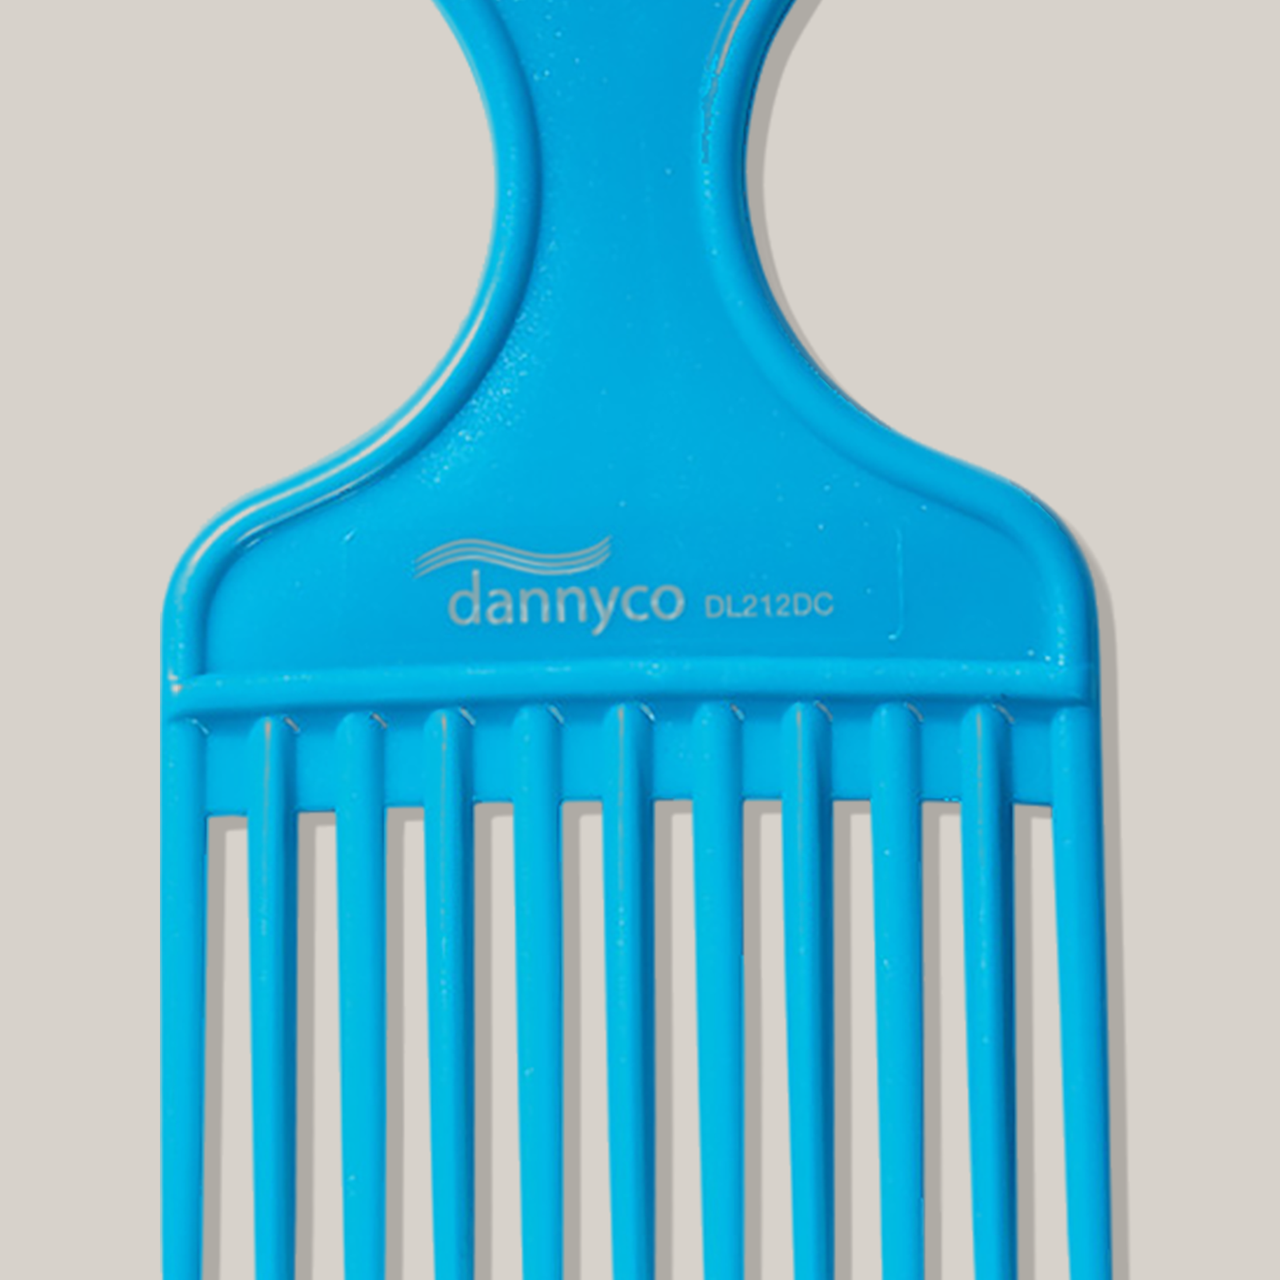 Dannyco Medium Lift Comb (Afro) DL212DC 